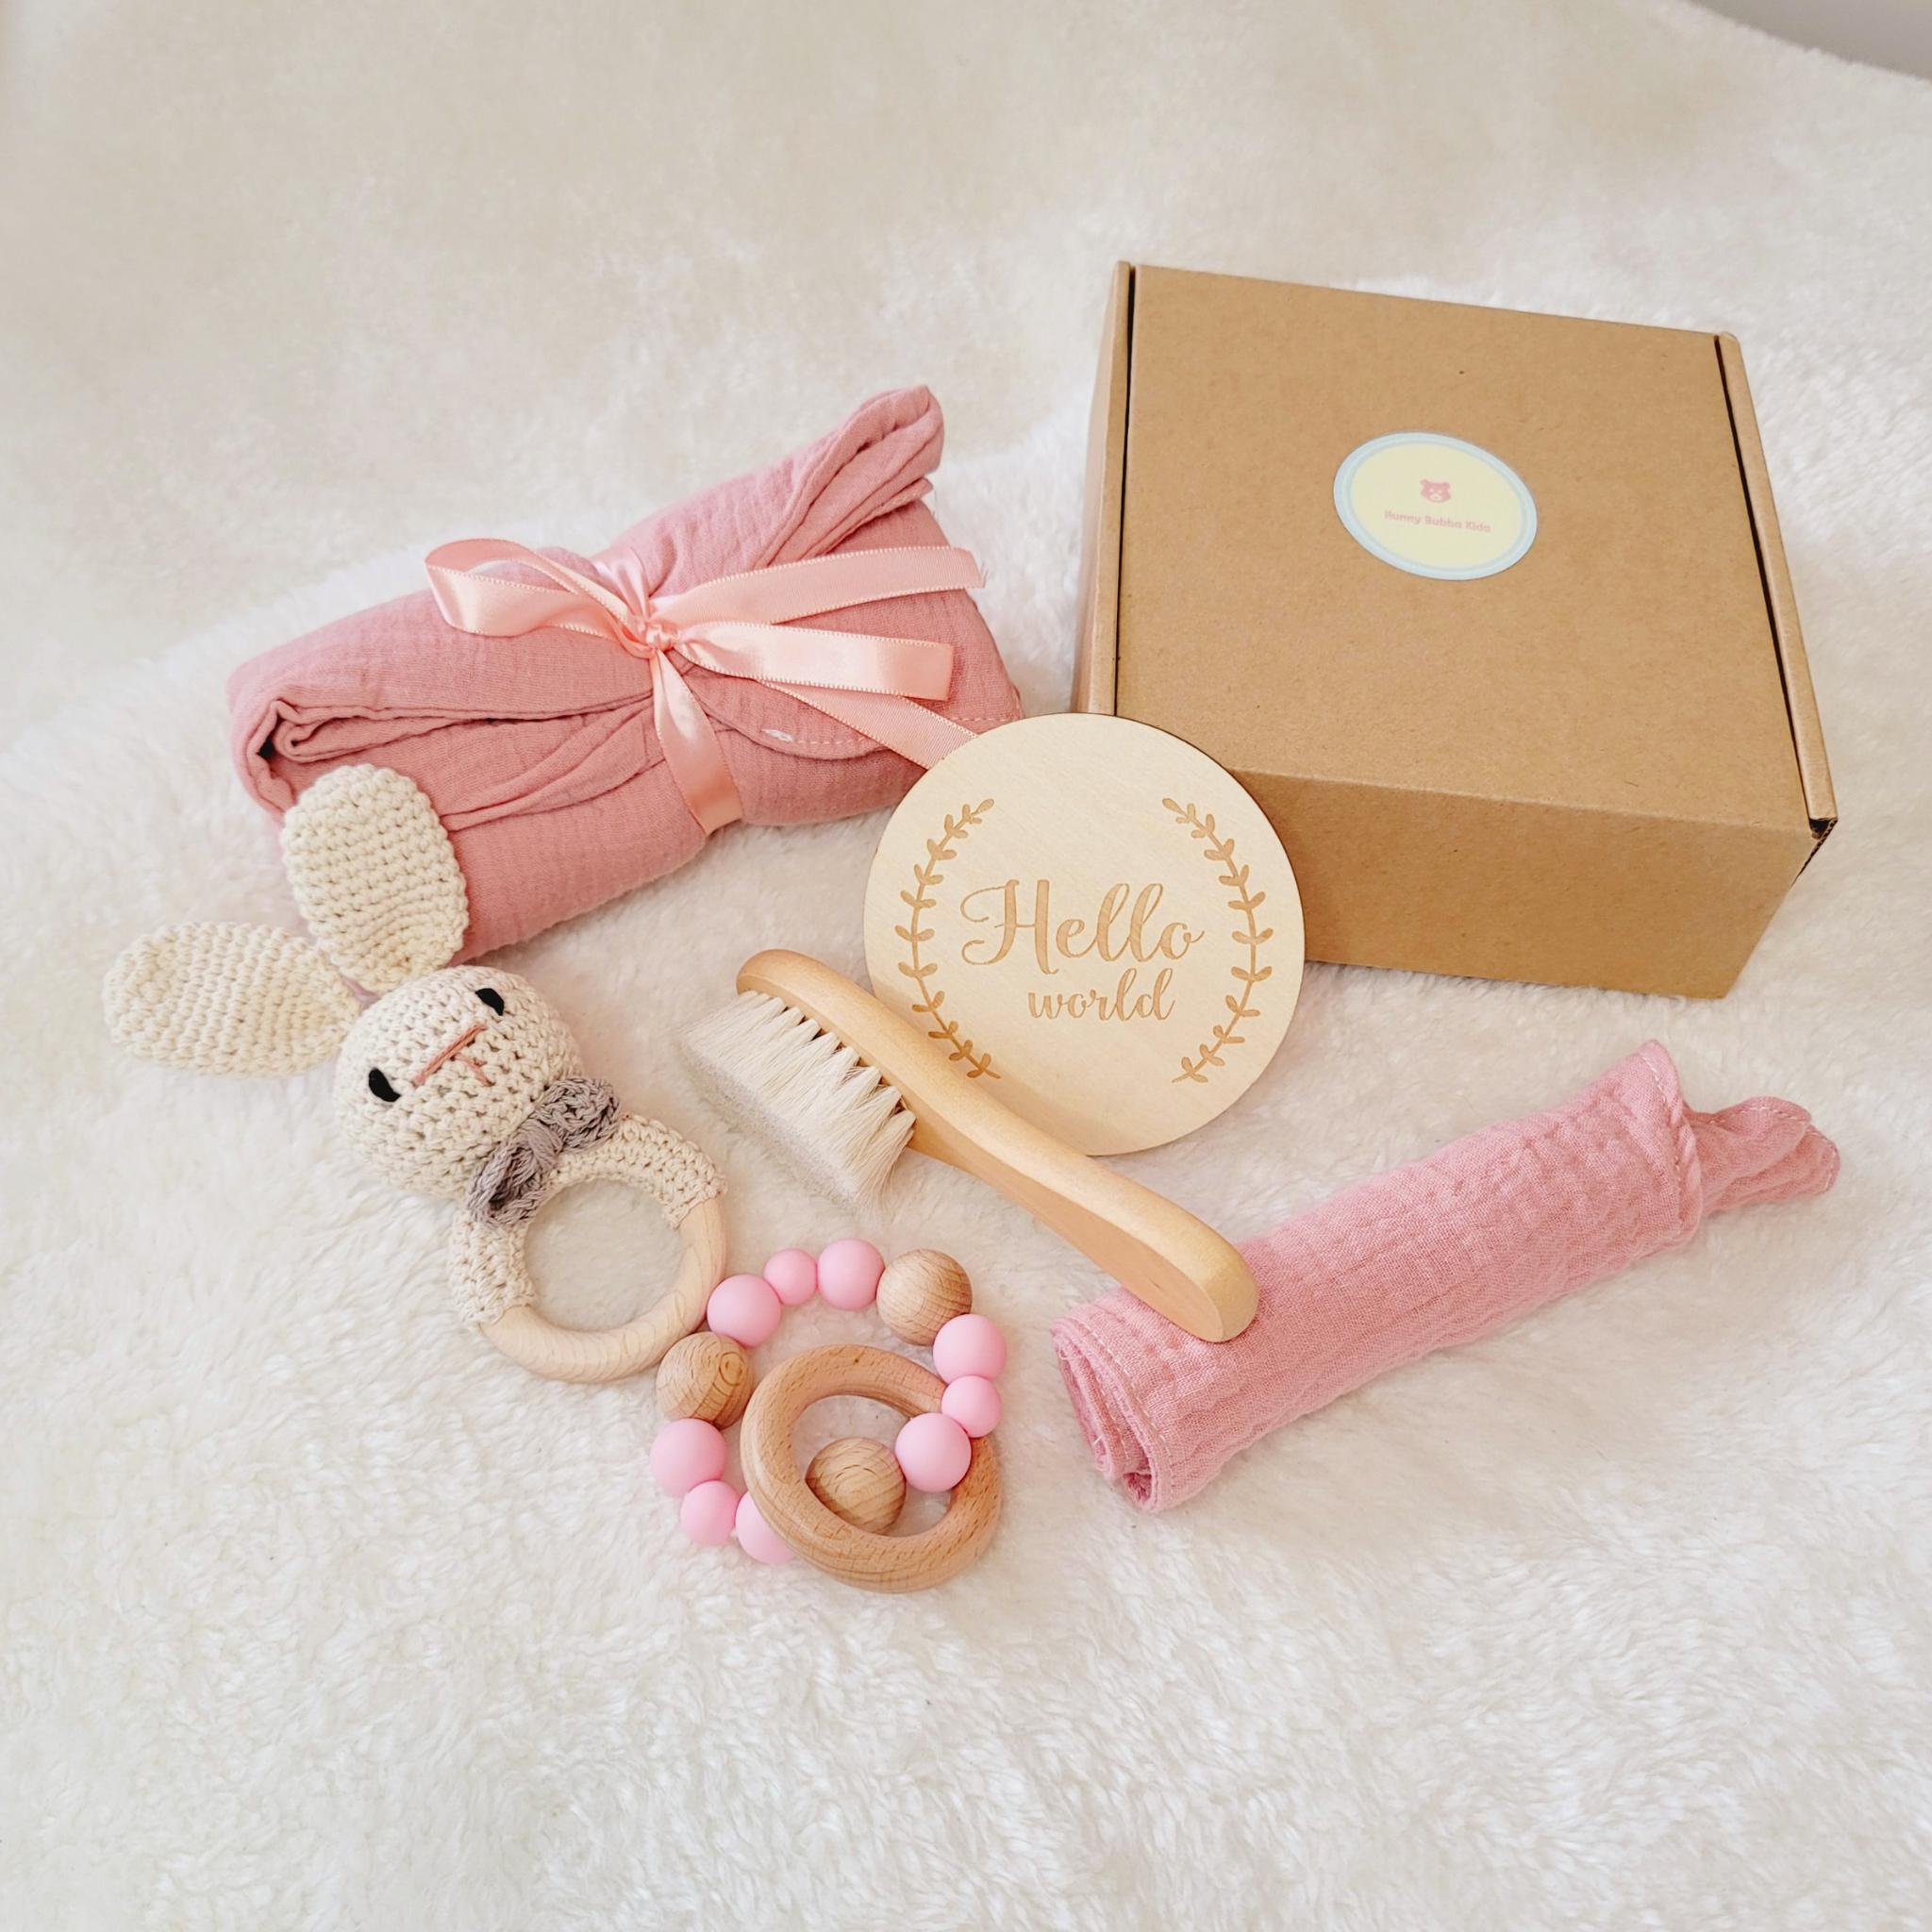 Handmade Baby Gift Ideas - The Idea Room | Handmade baby shower gift,  Homemade baby gifts, Handmade baby gifts